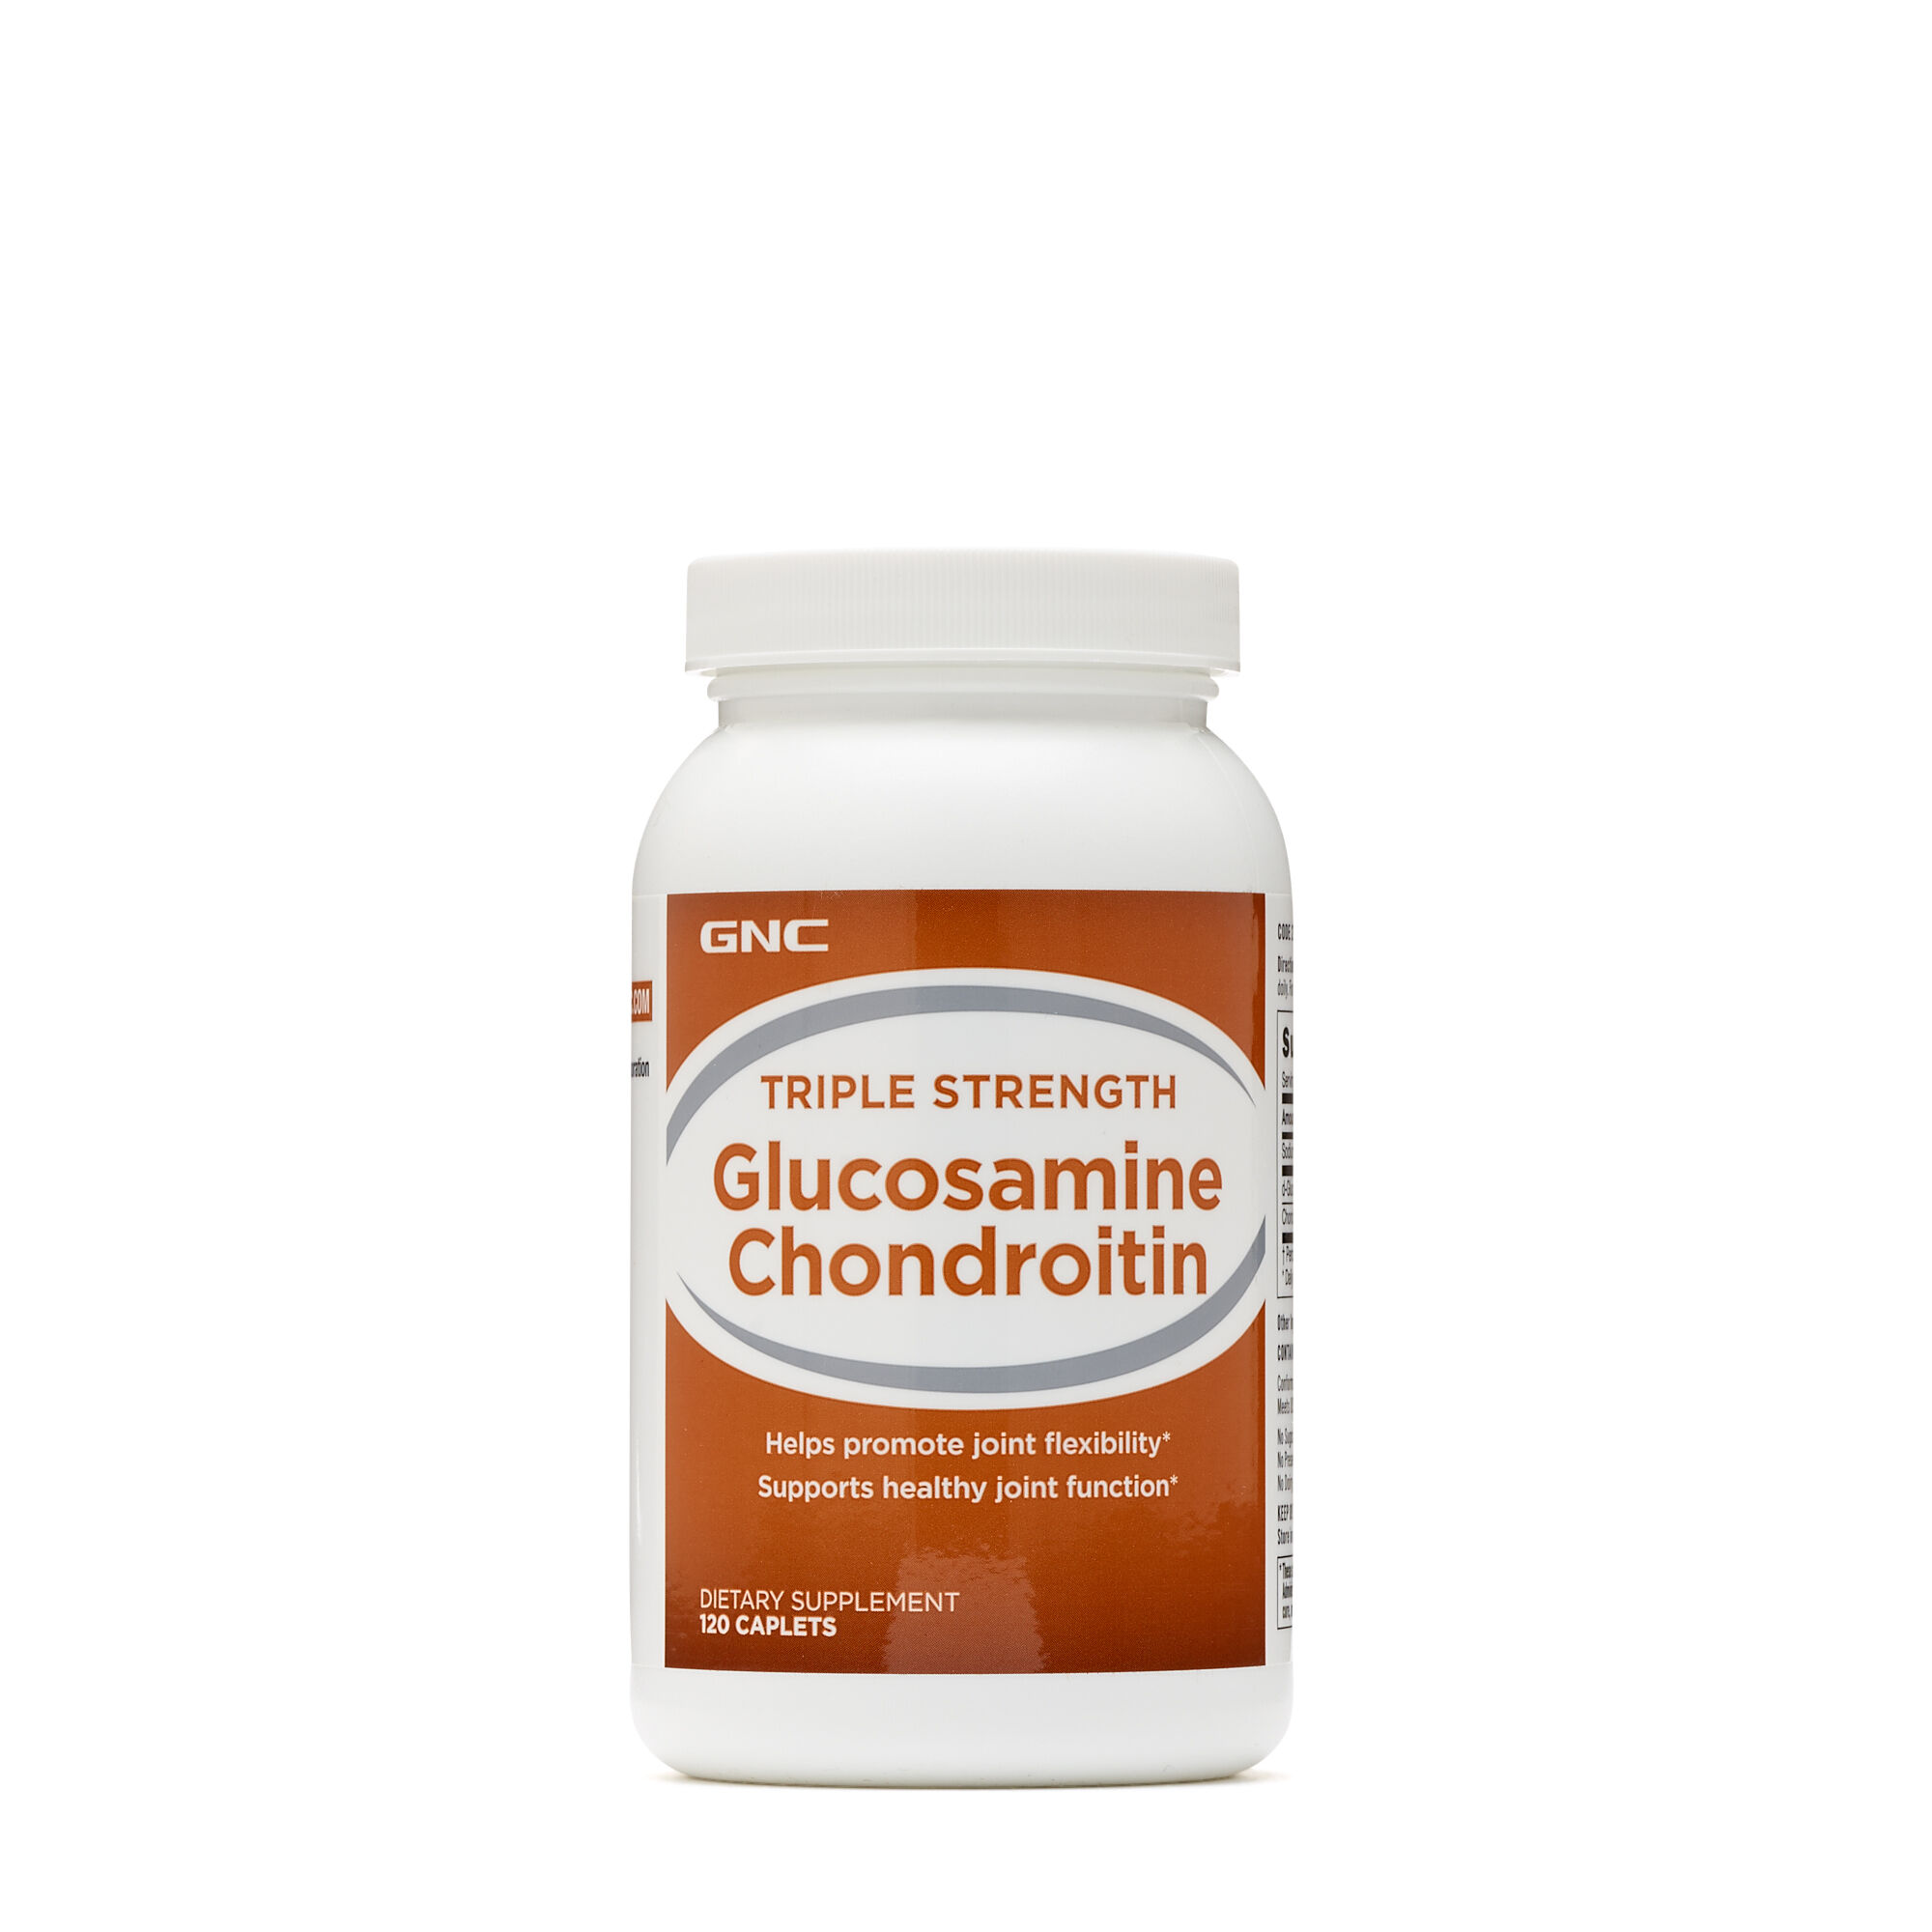 Chondroitin glucosamine price reviews